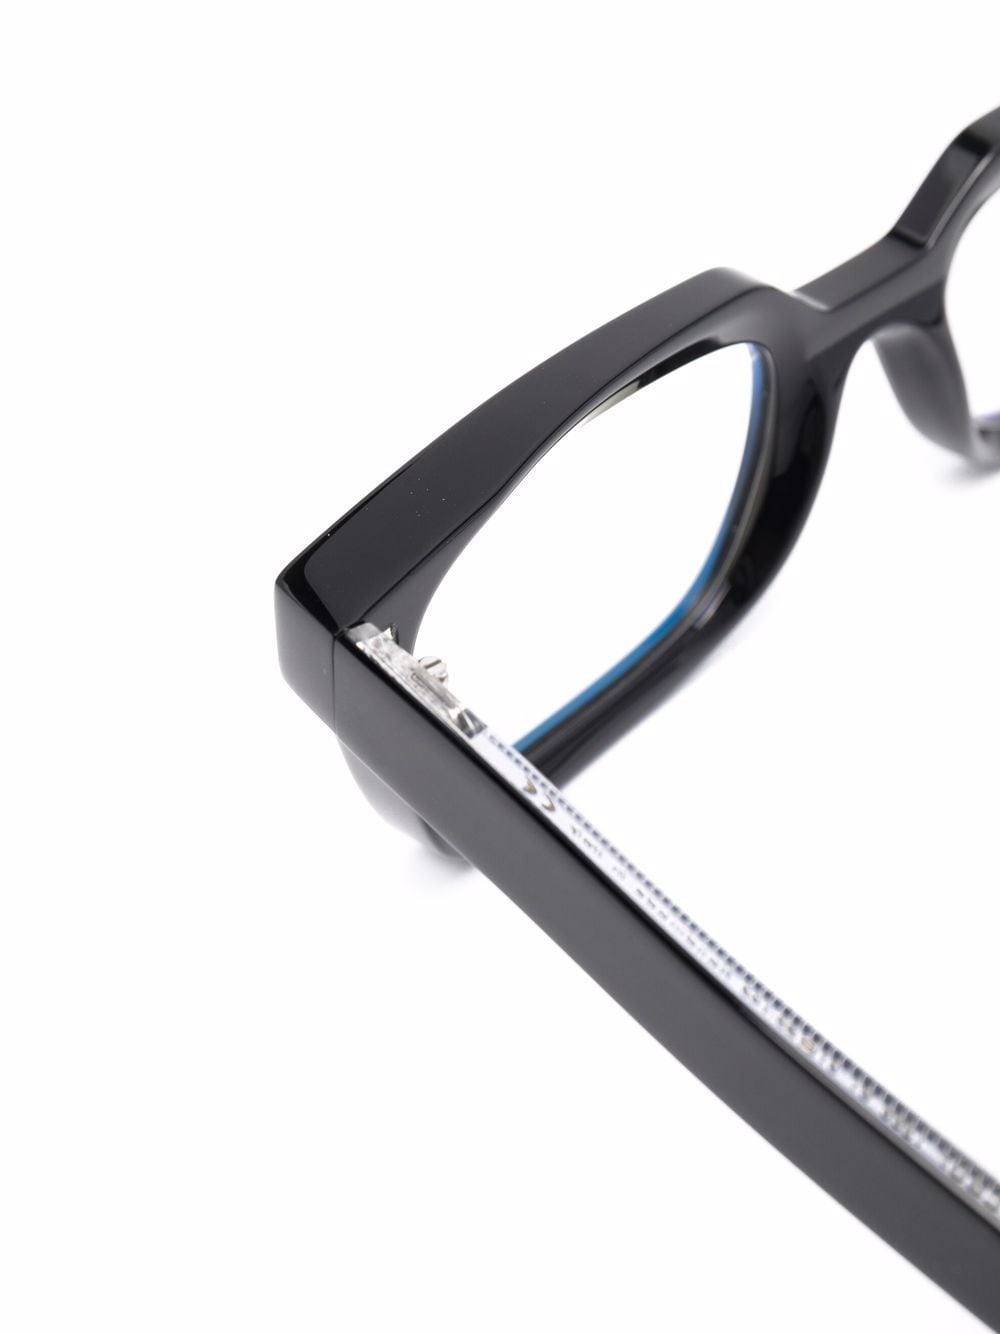 фото Cutler & gross очки в квадратной оправе